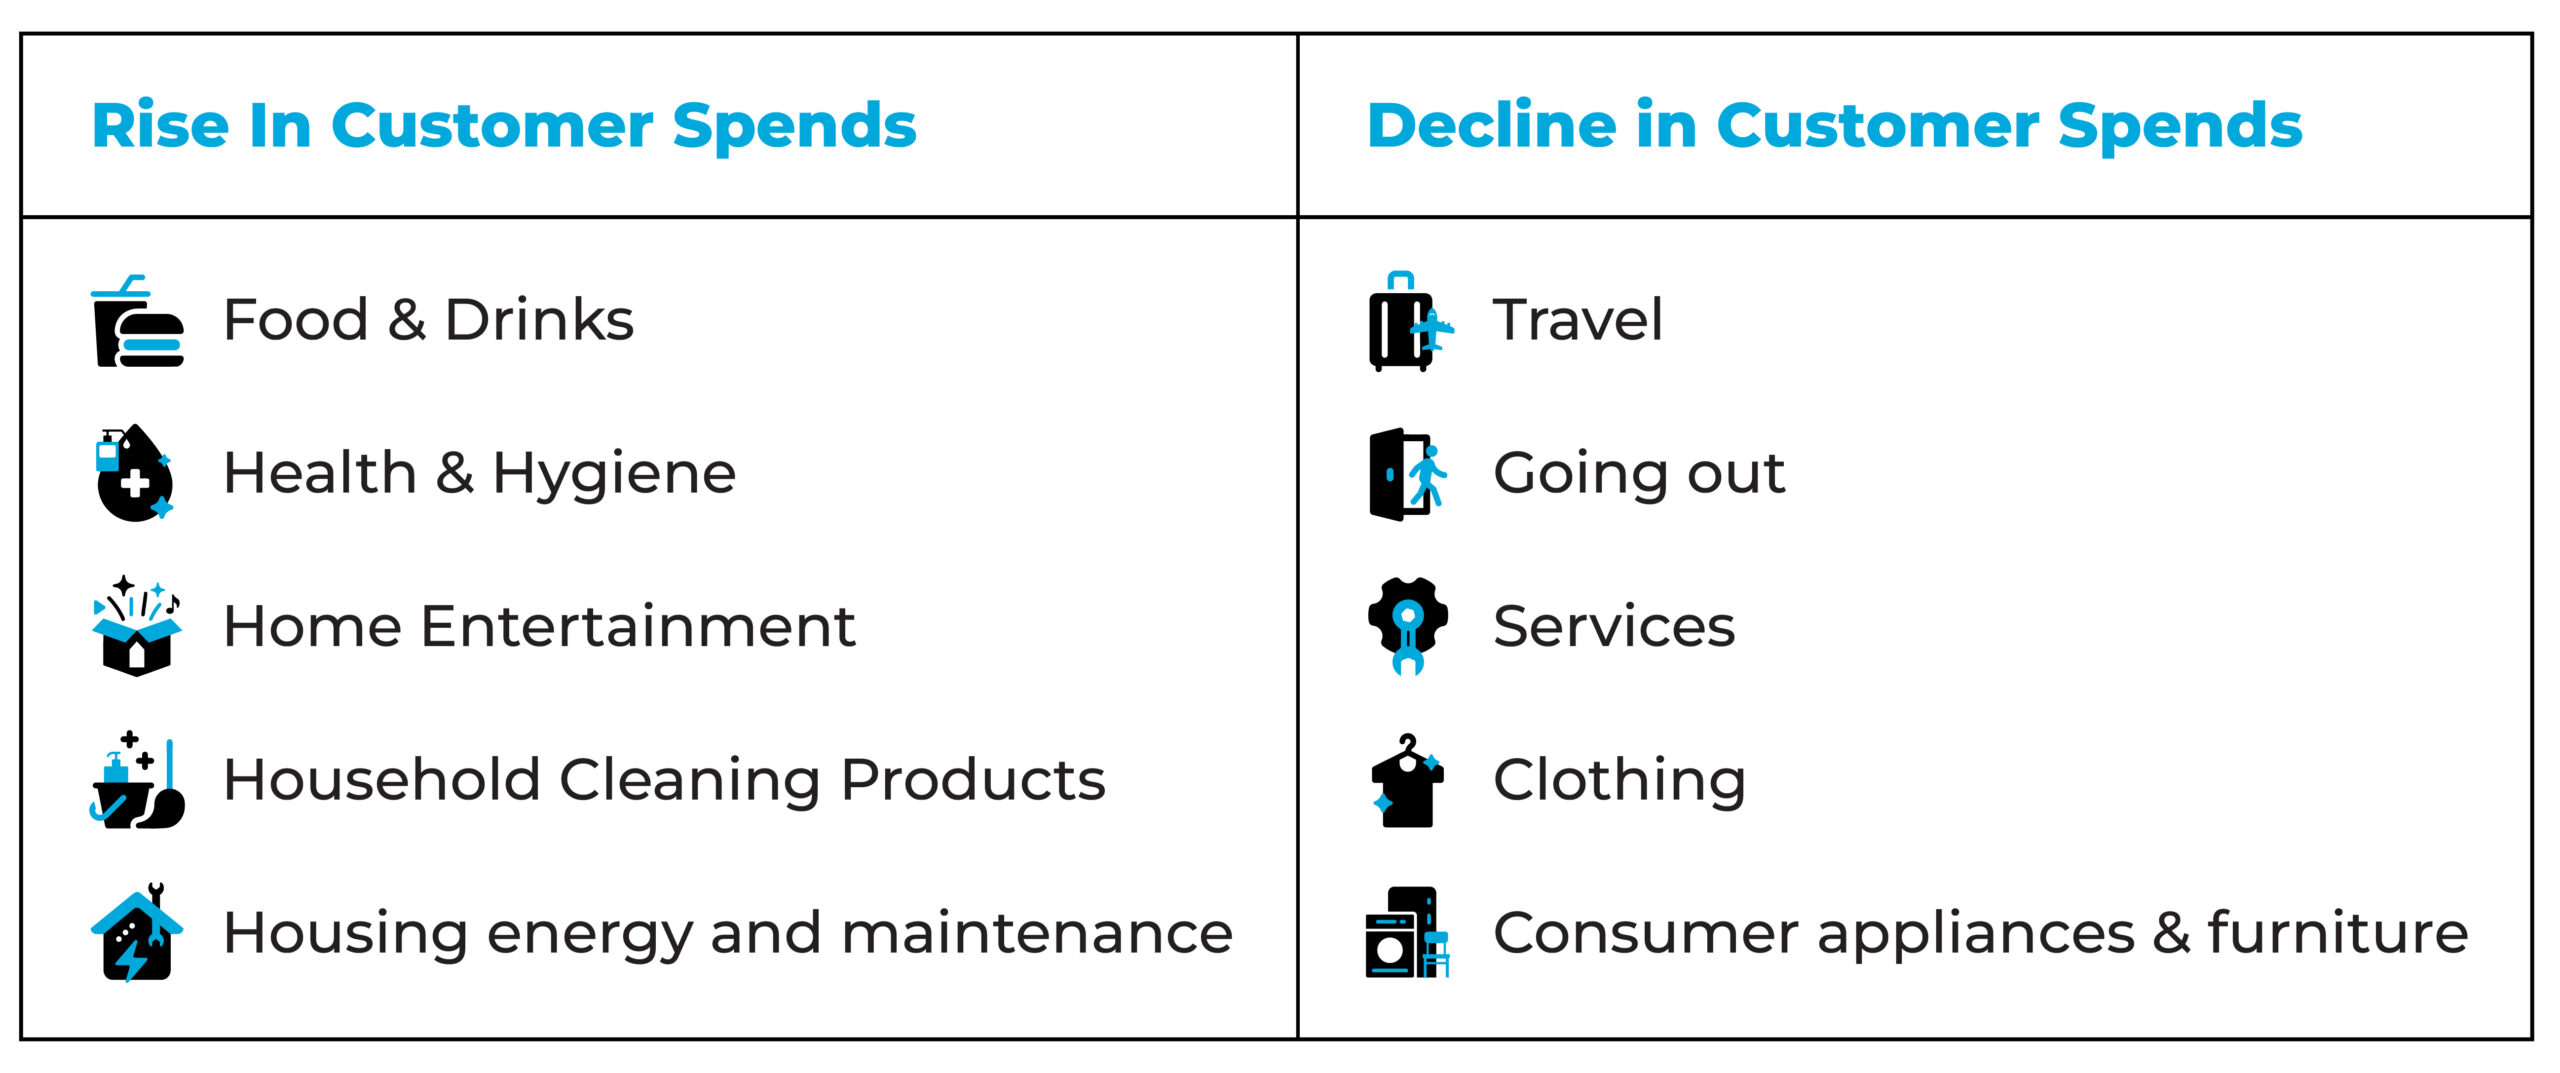 Customer spending patterns post Covid-19